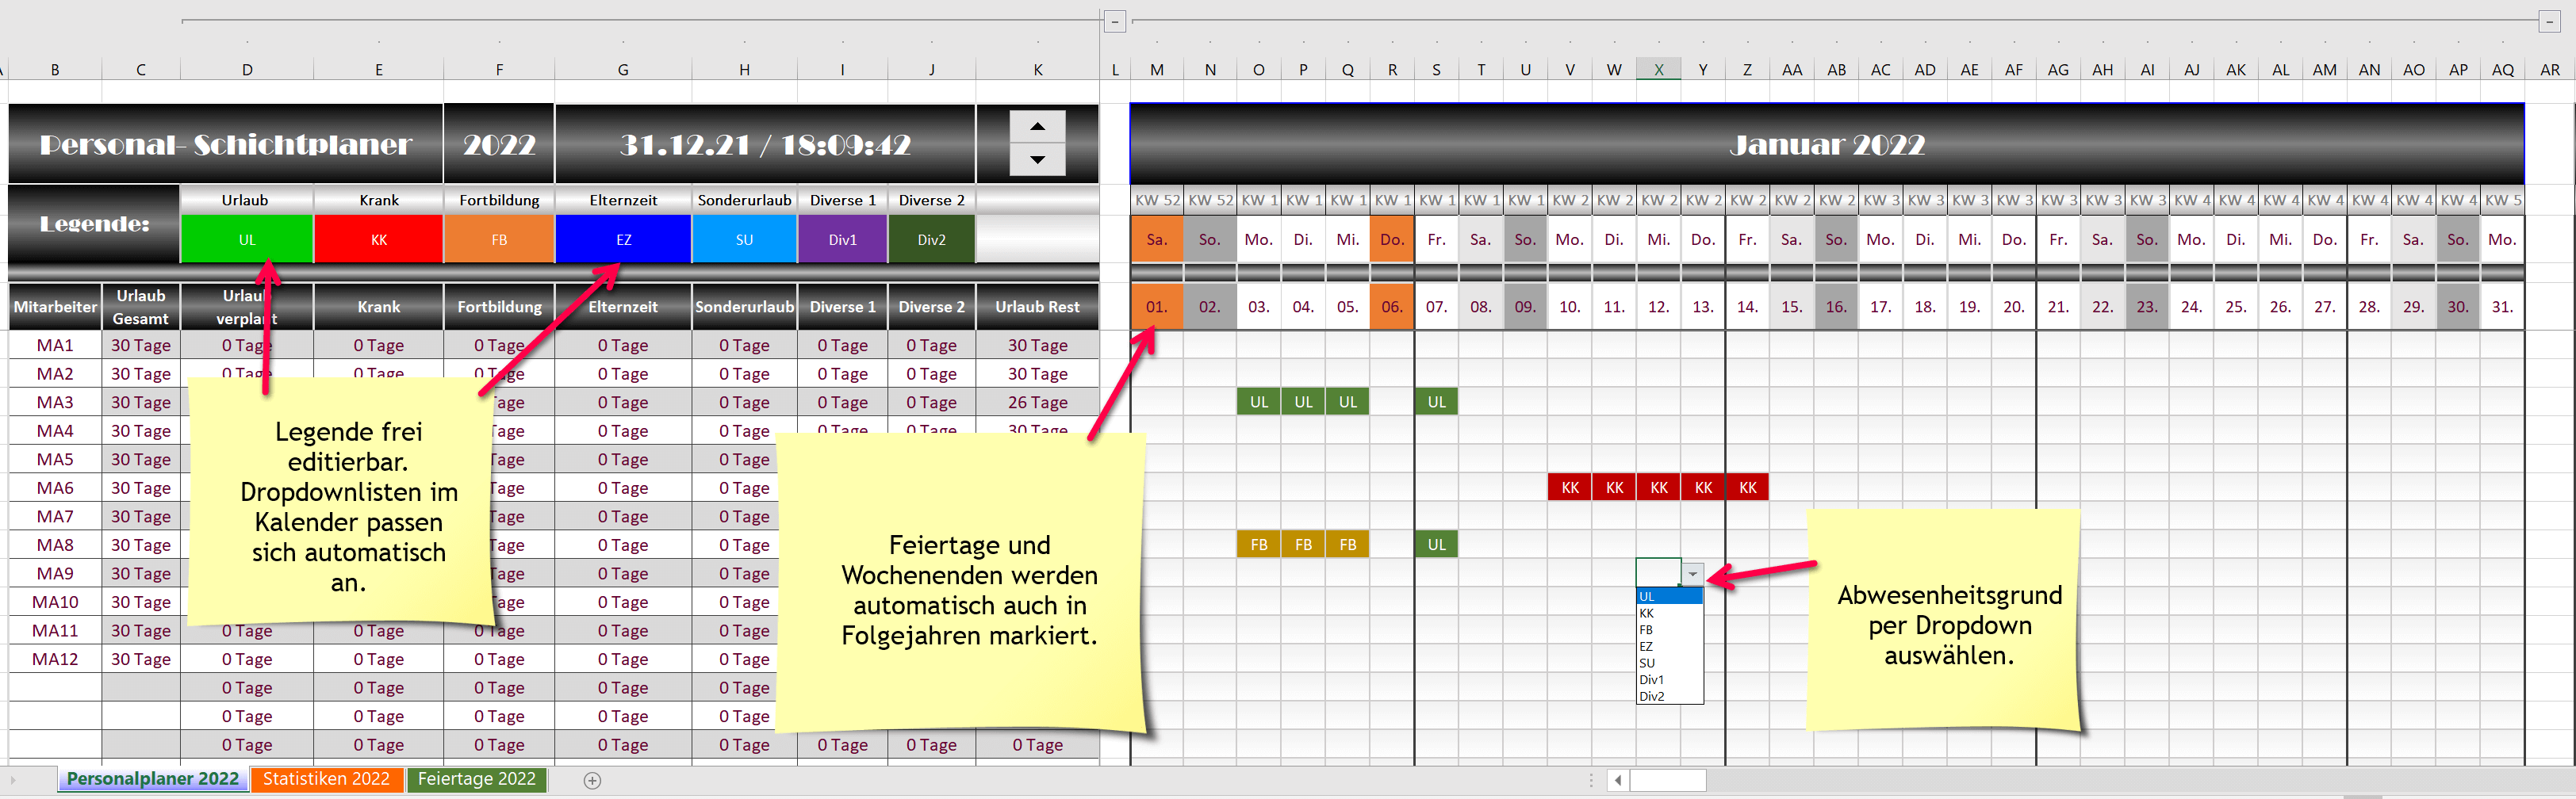 Excel Personalplaner -2022 V1.3 Abb. 1